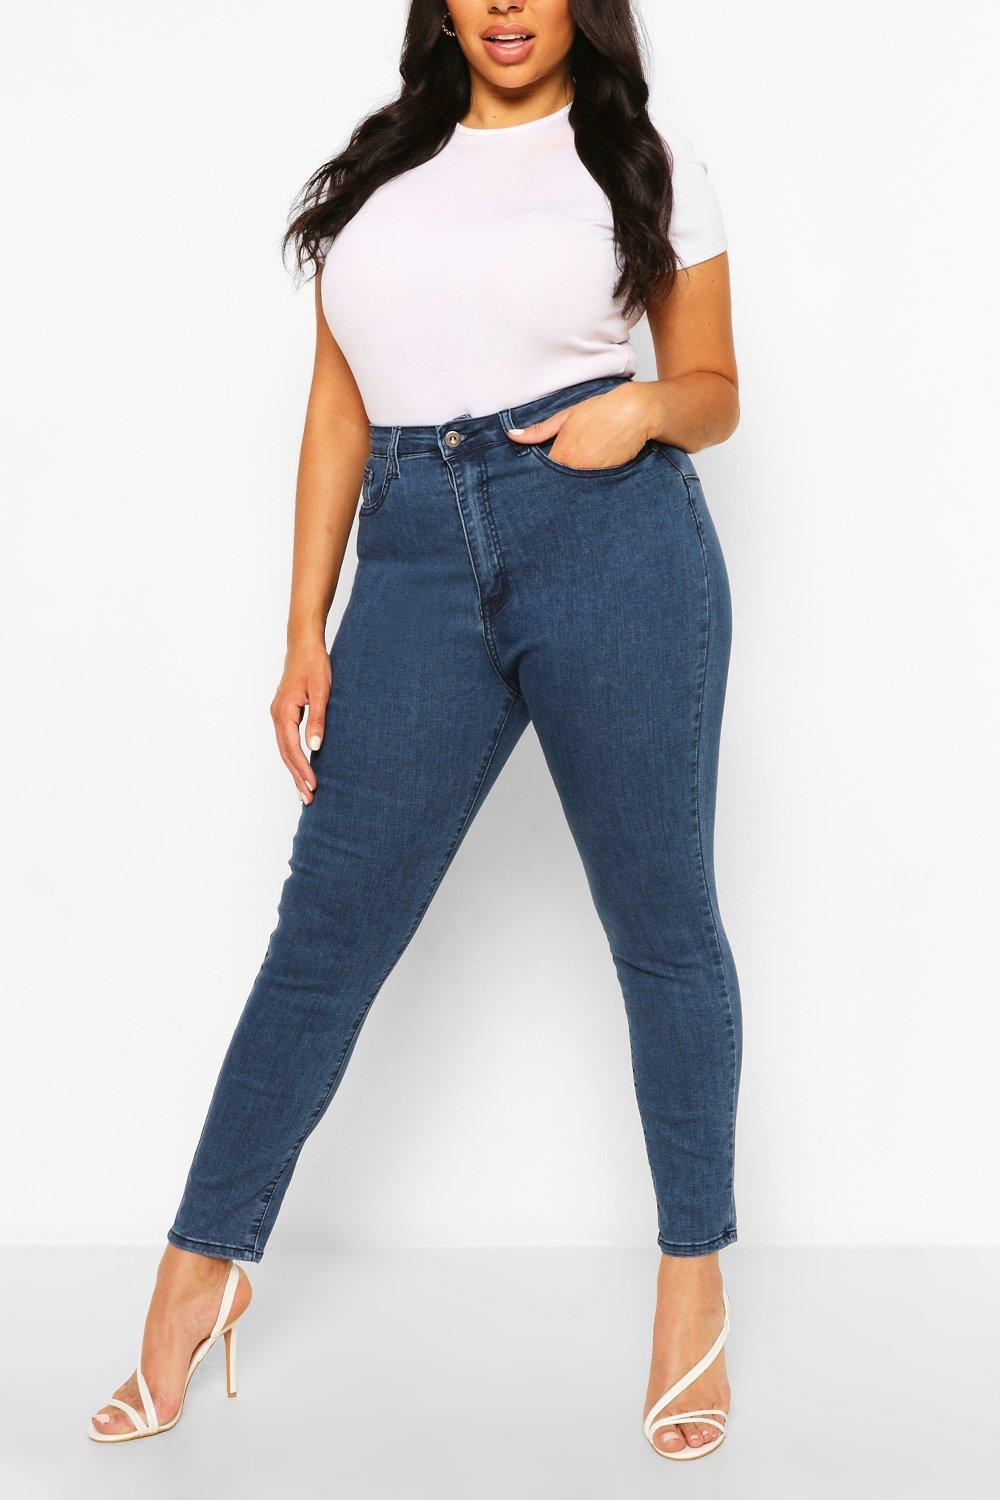 khloe kardashian skinny jeans